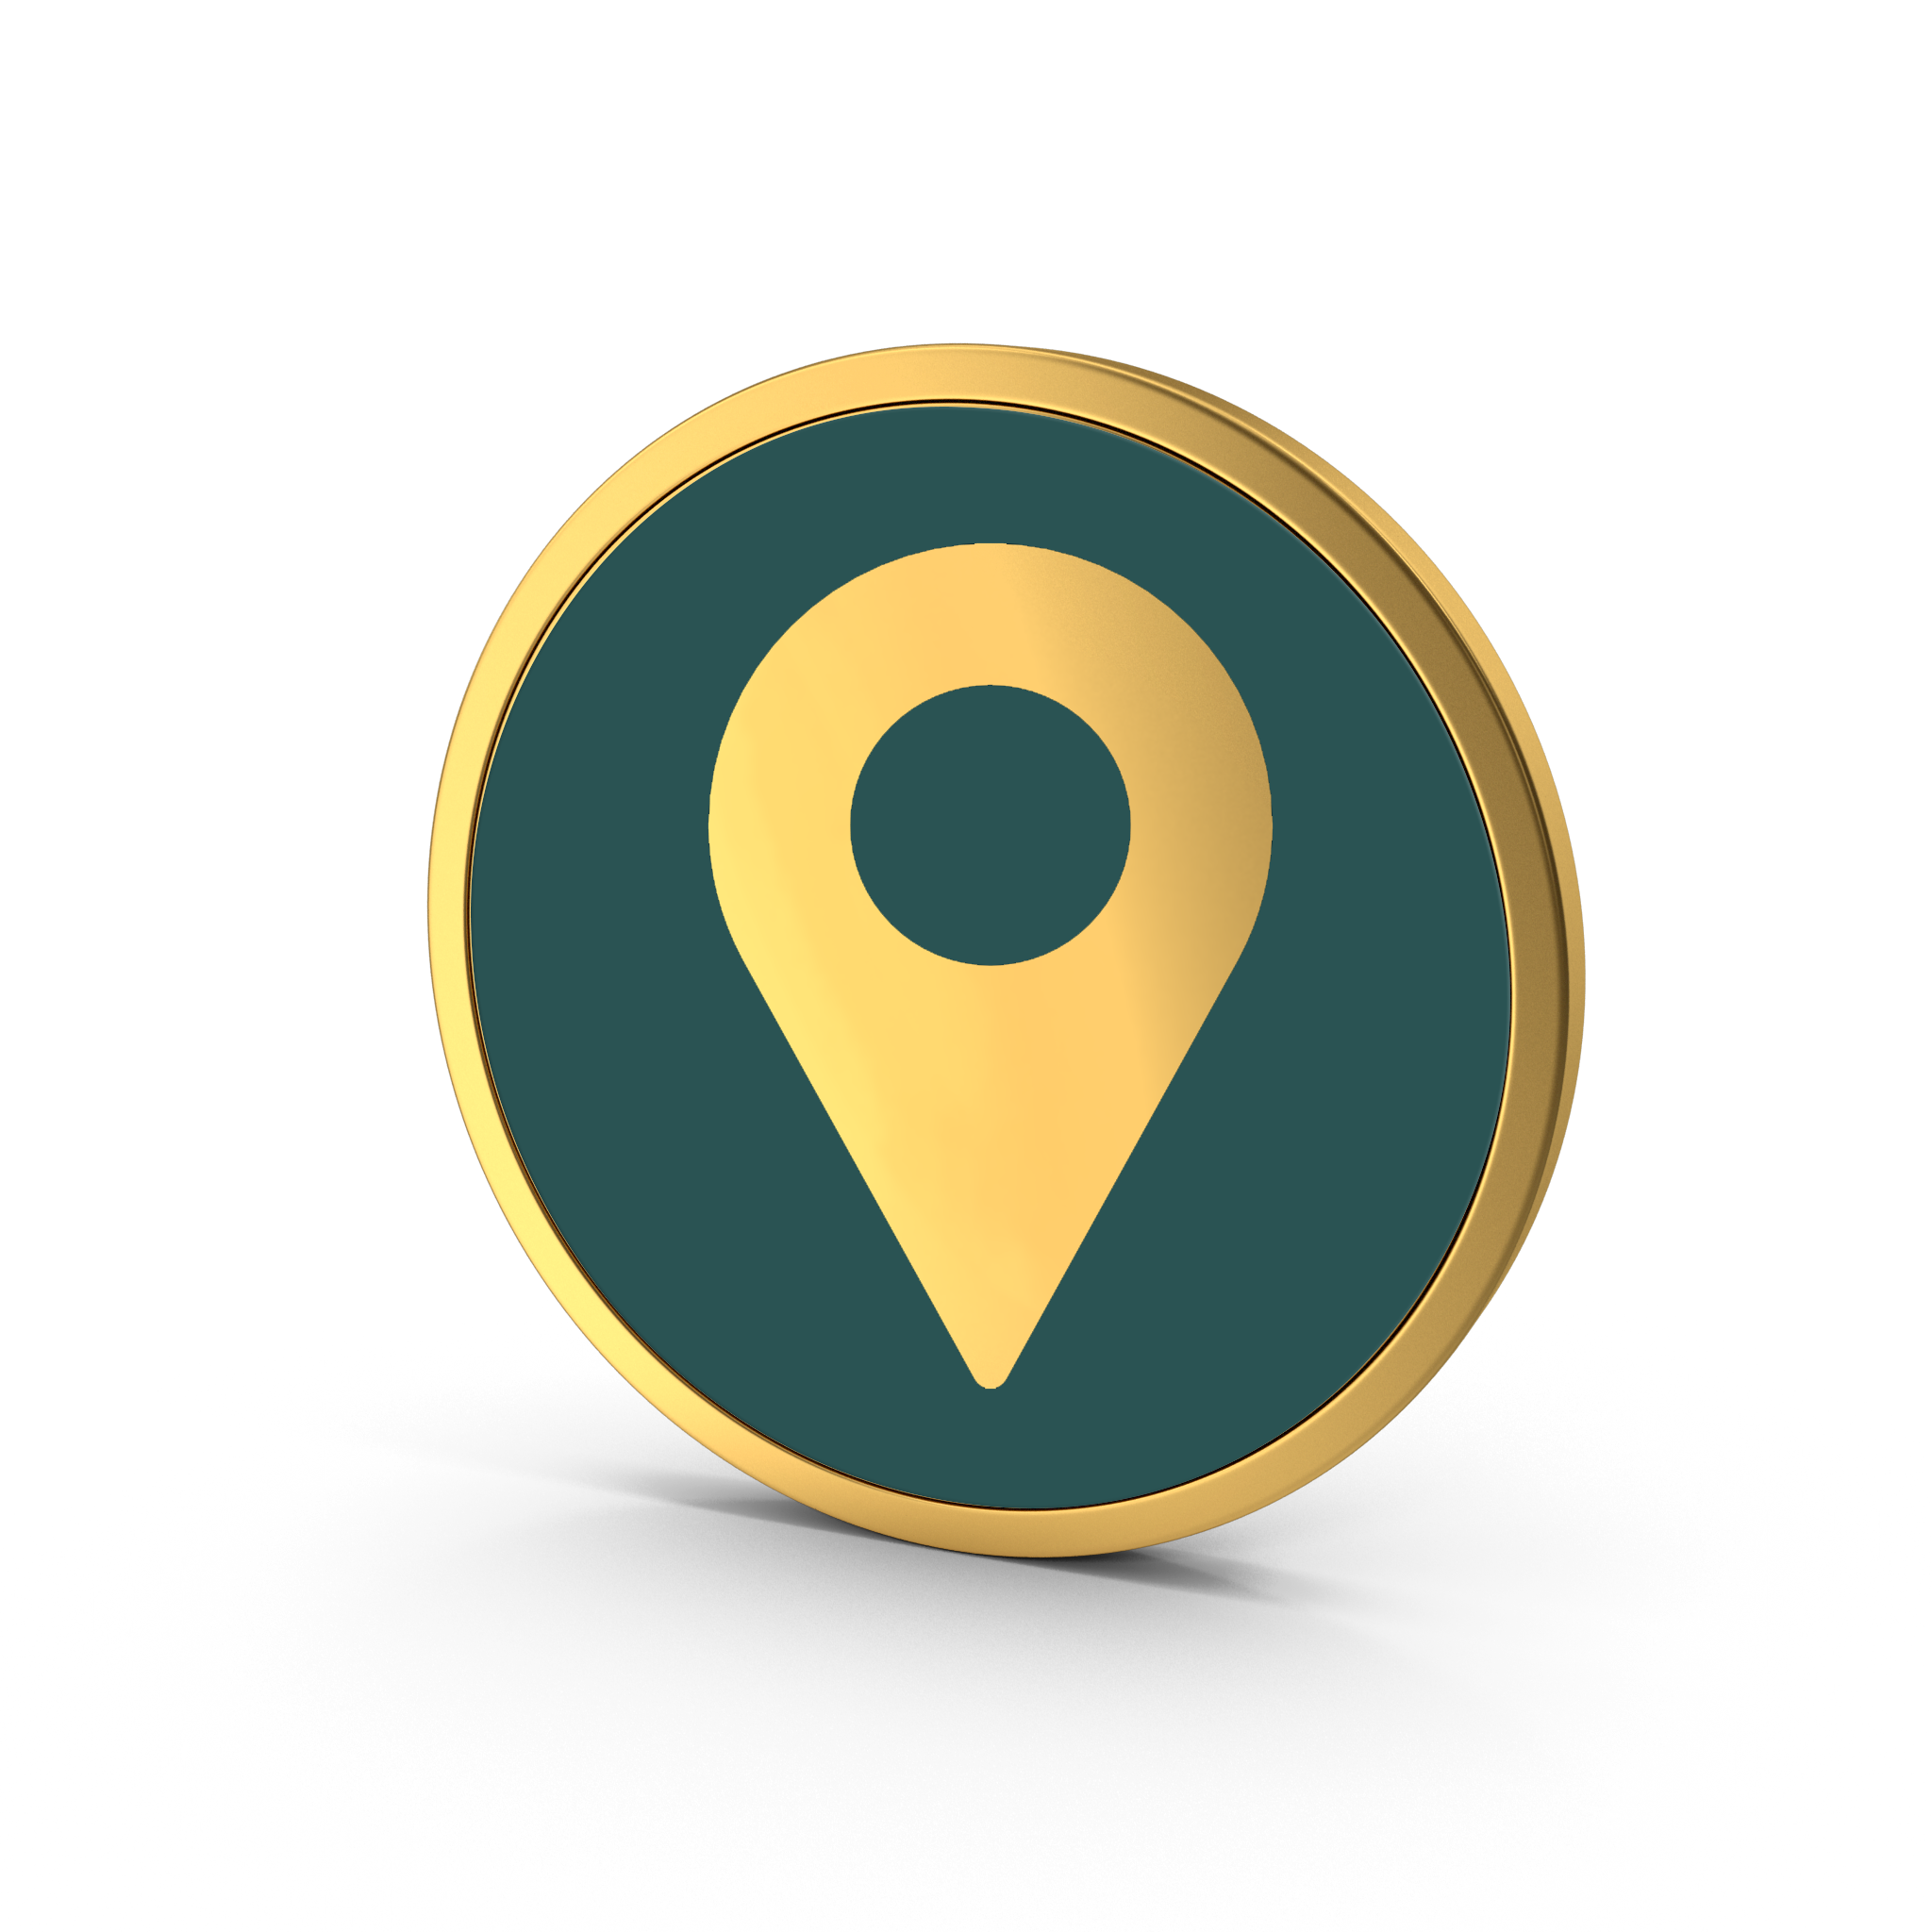 Gold location pin icon